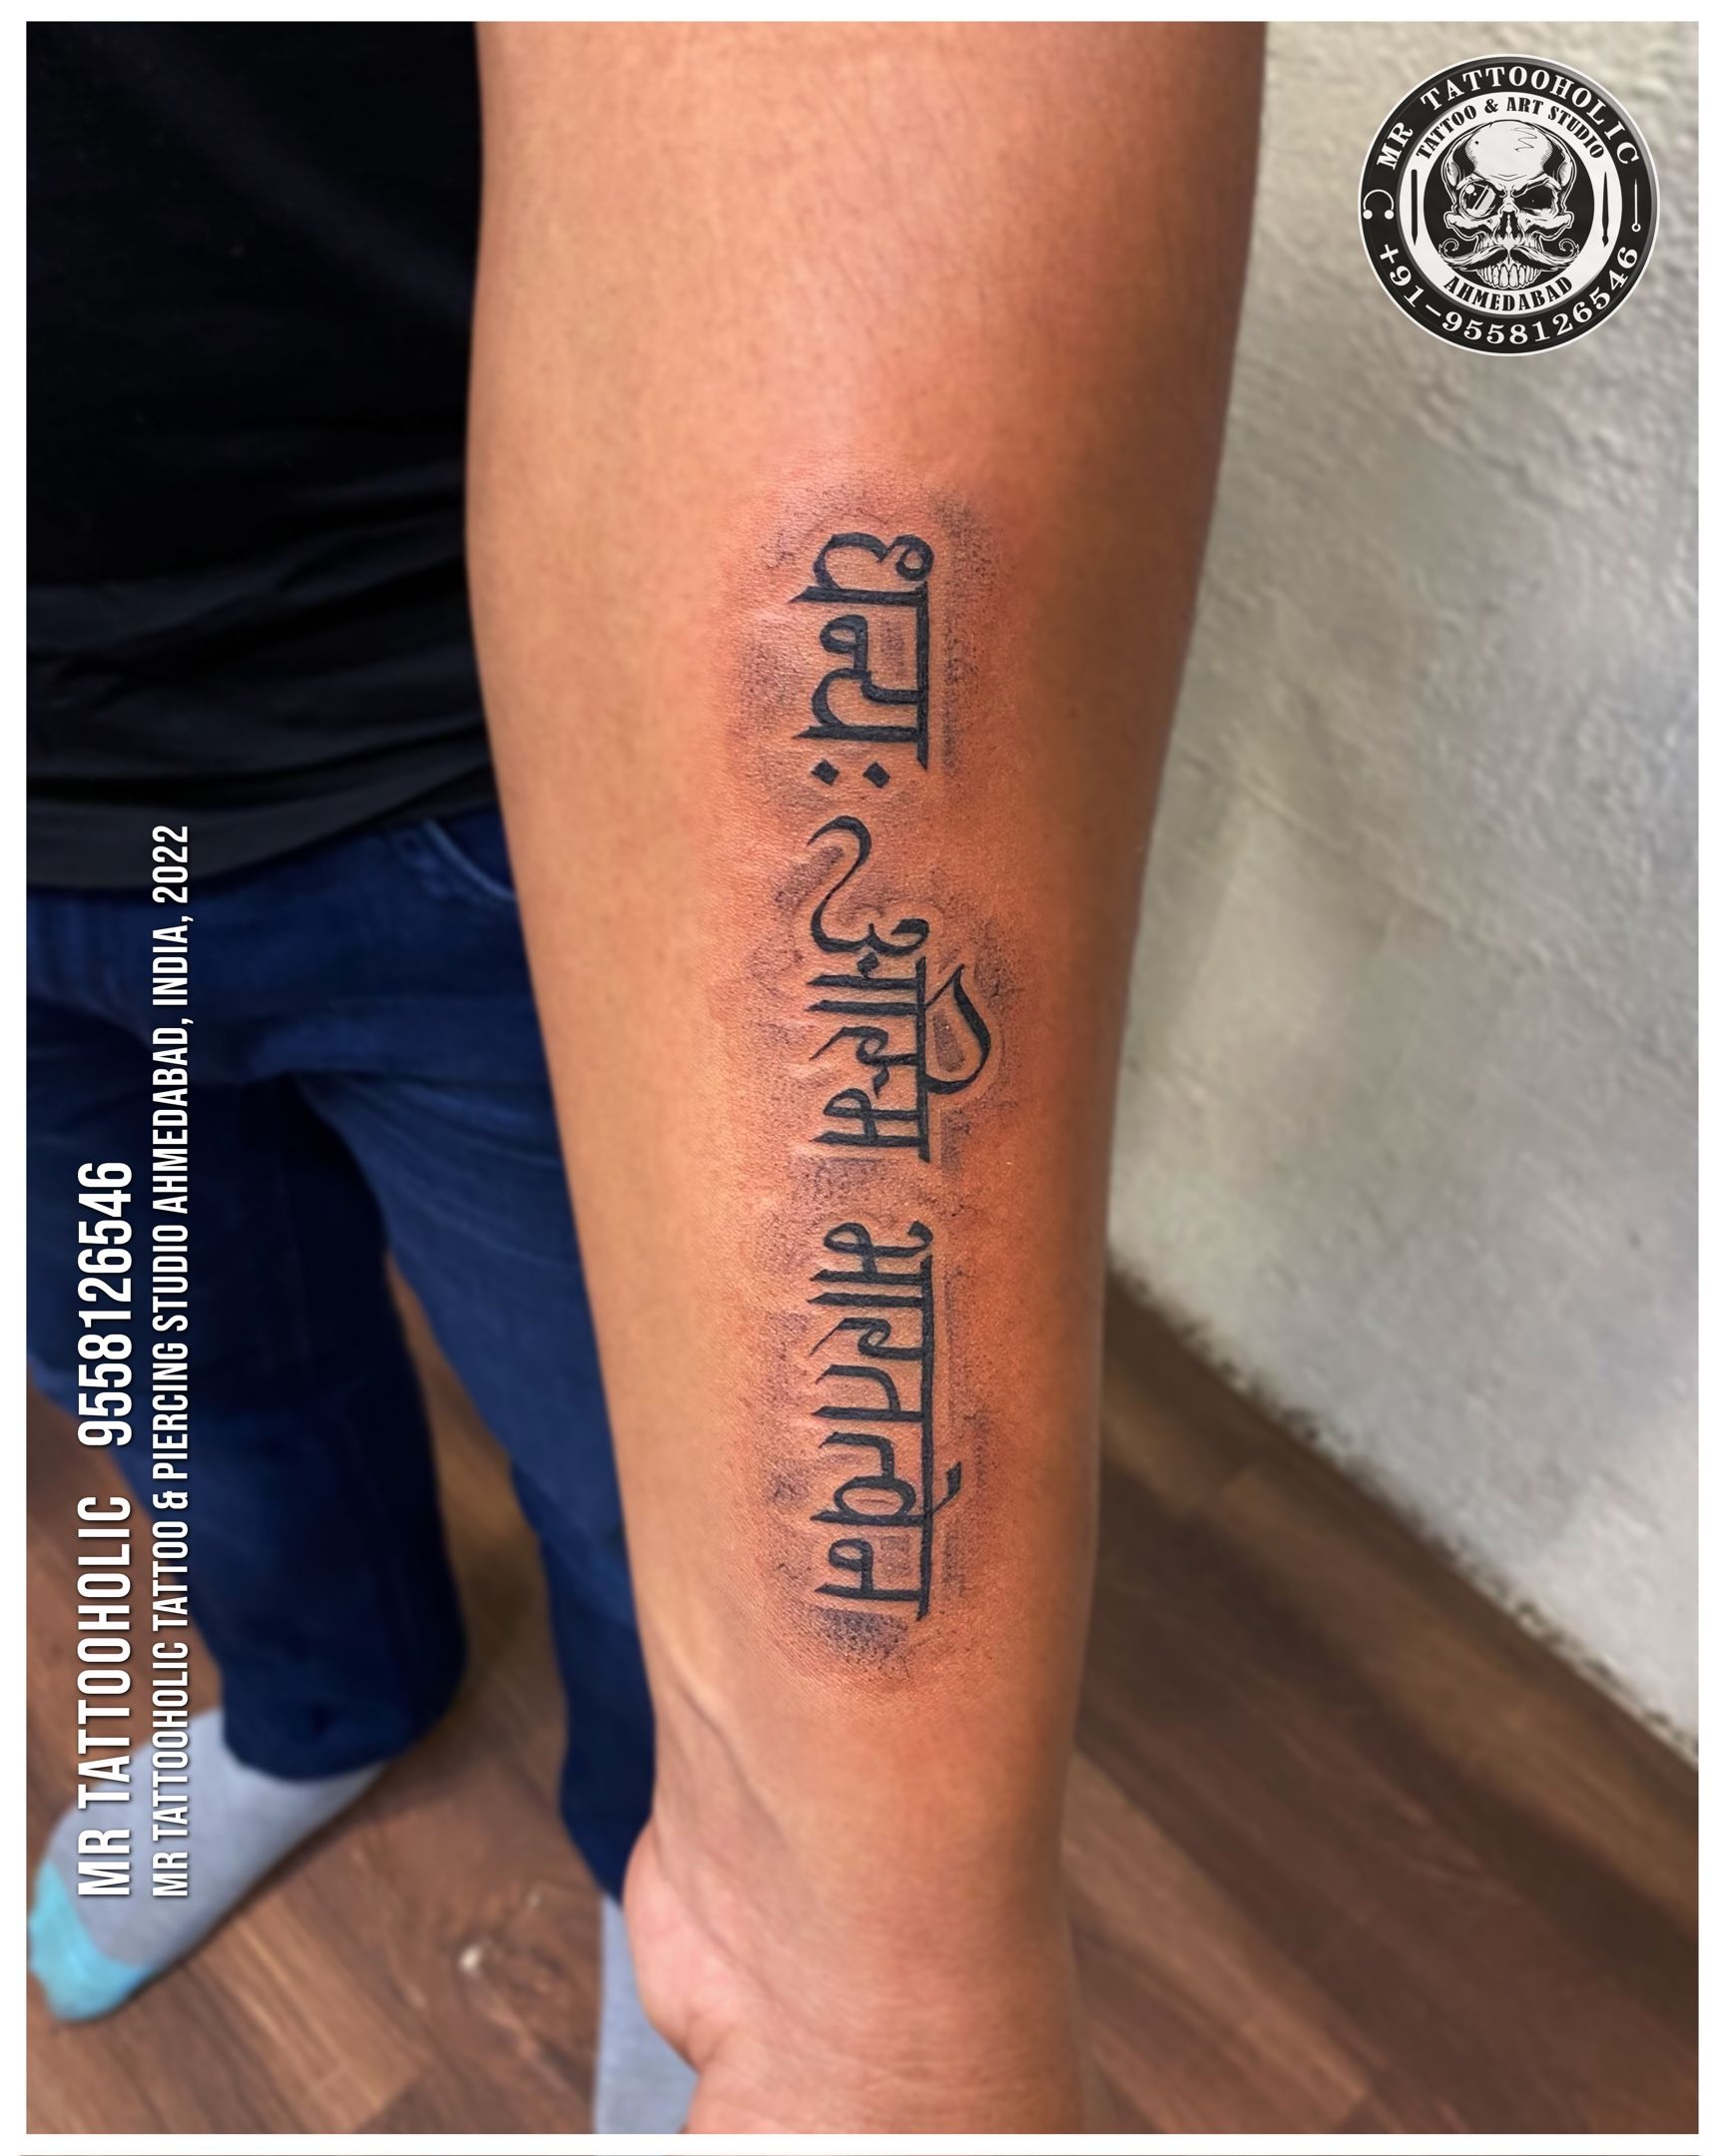 Updates | CRAZY INK TATTOO & BODY PIERCING in Raipur, India